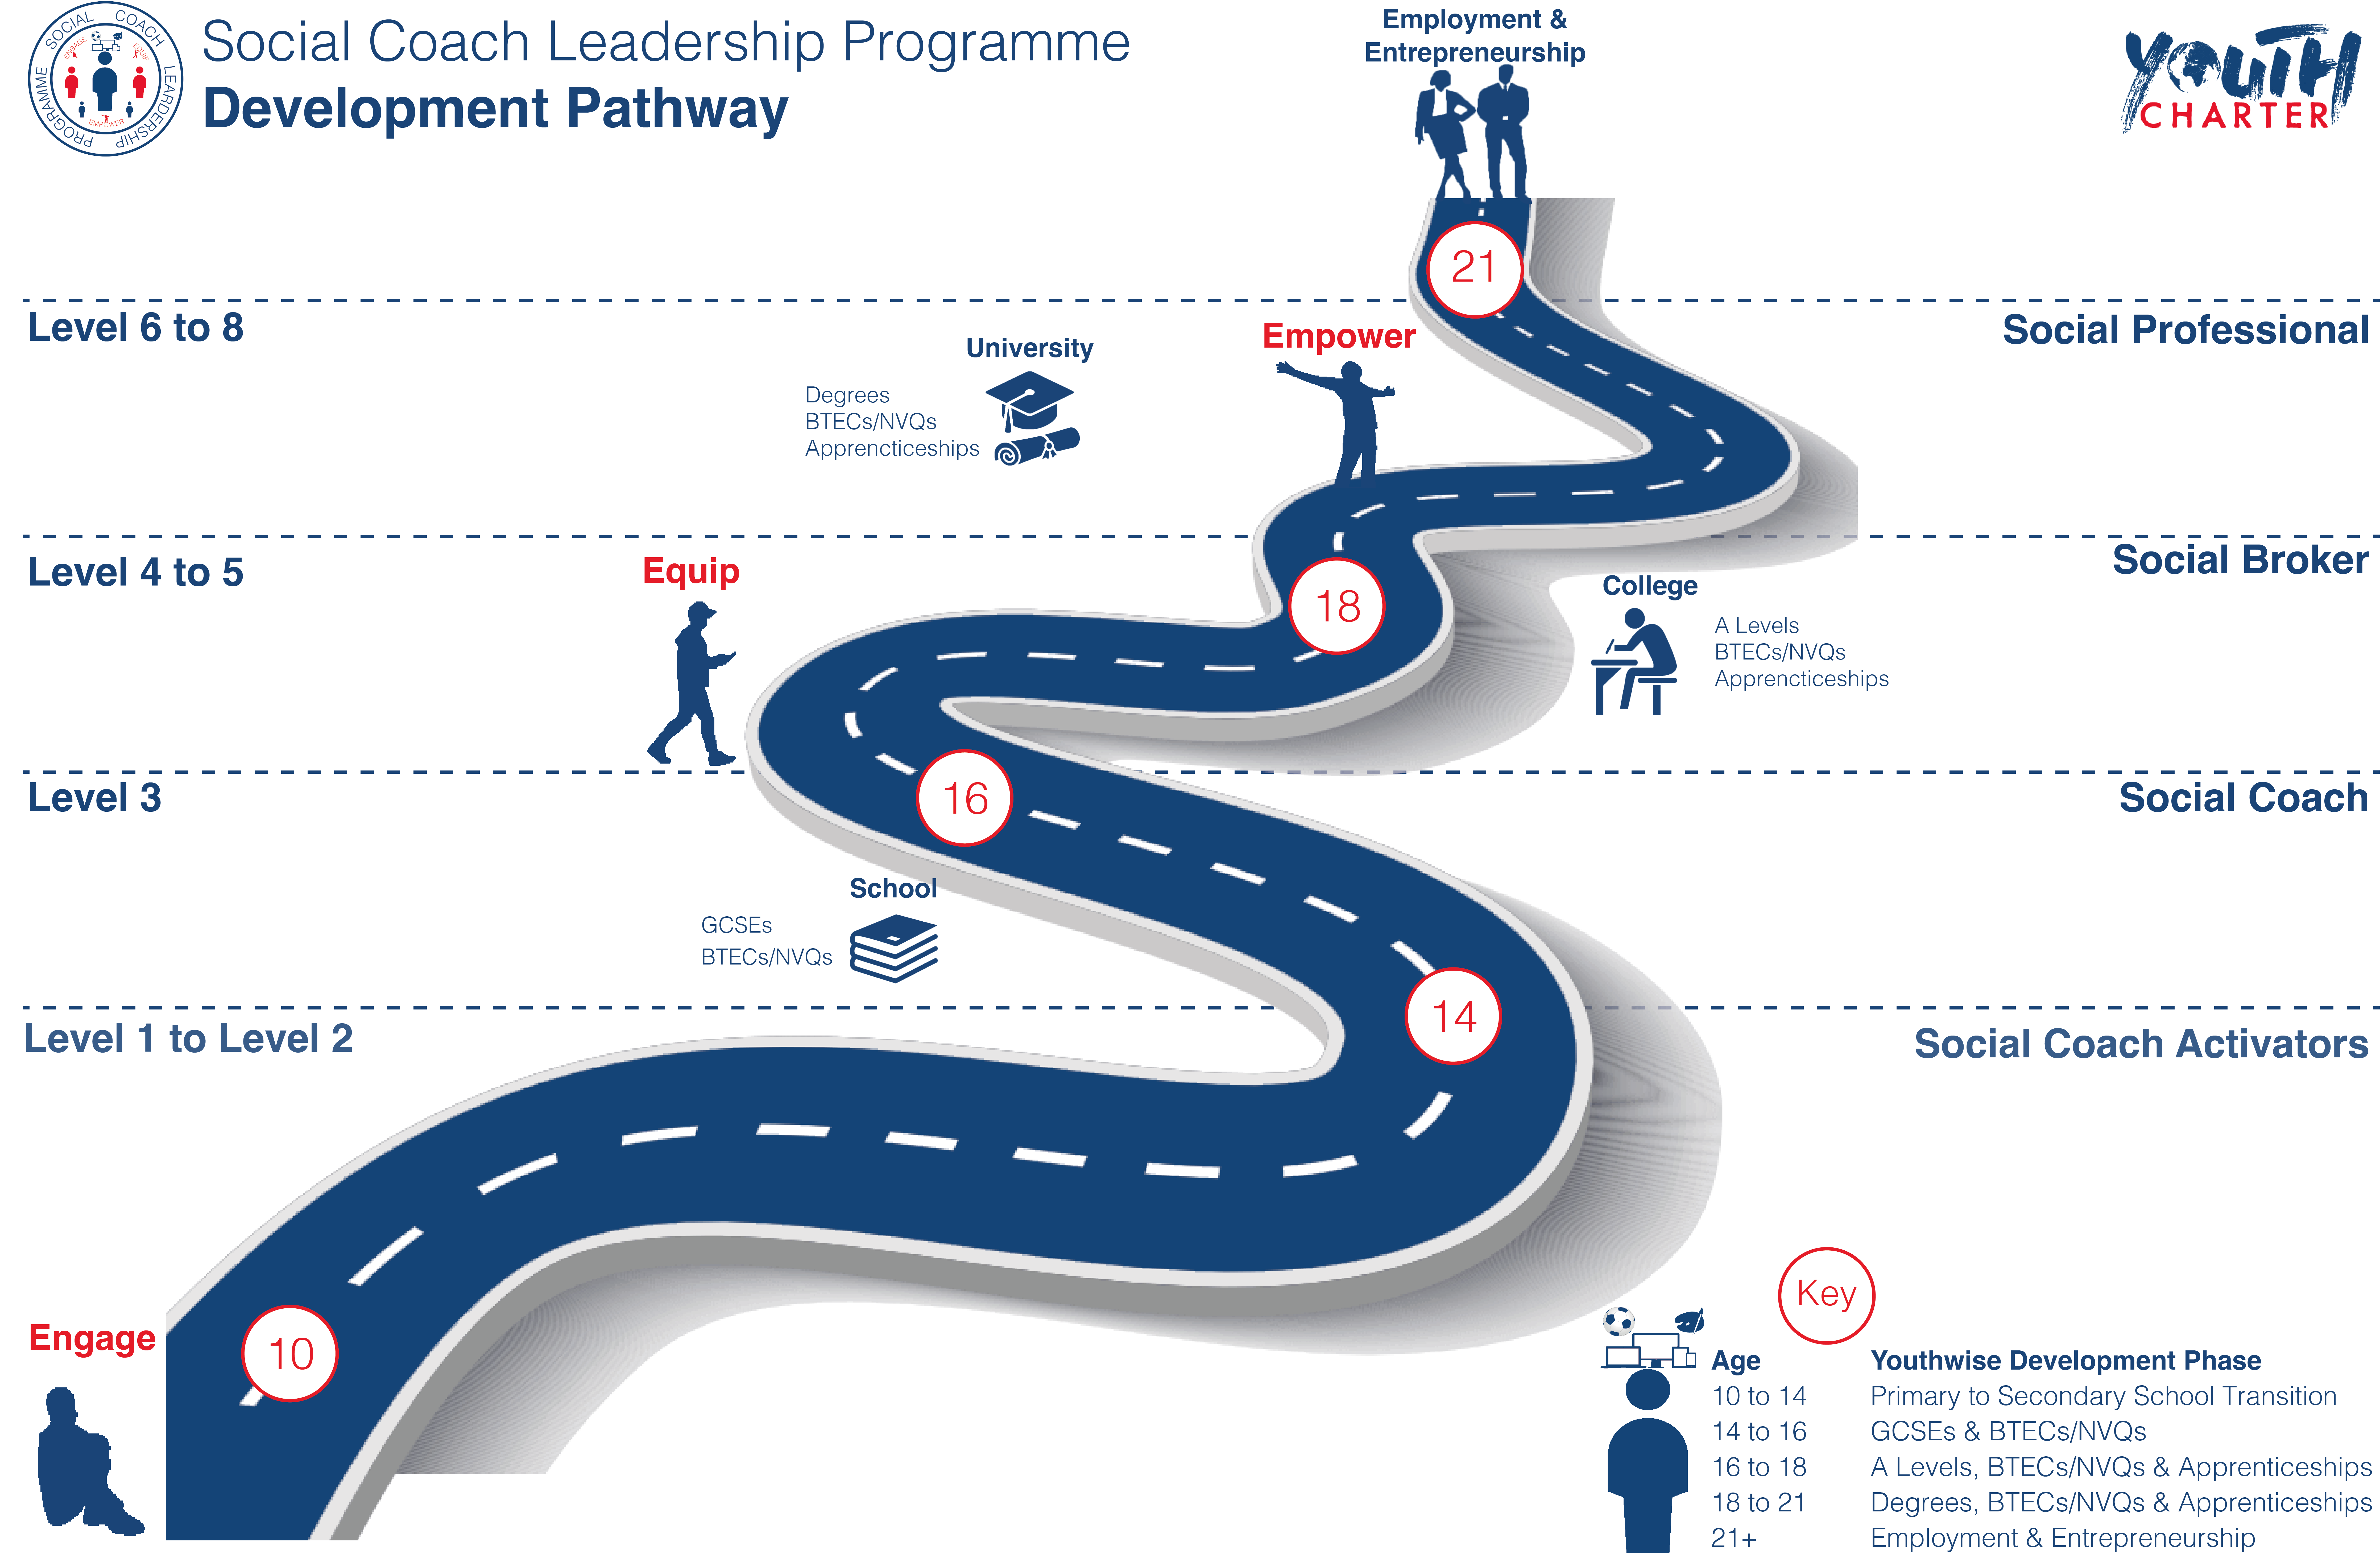 SCLP Development Pathway